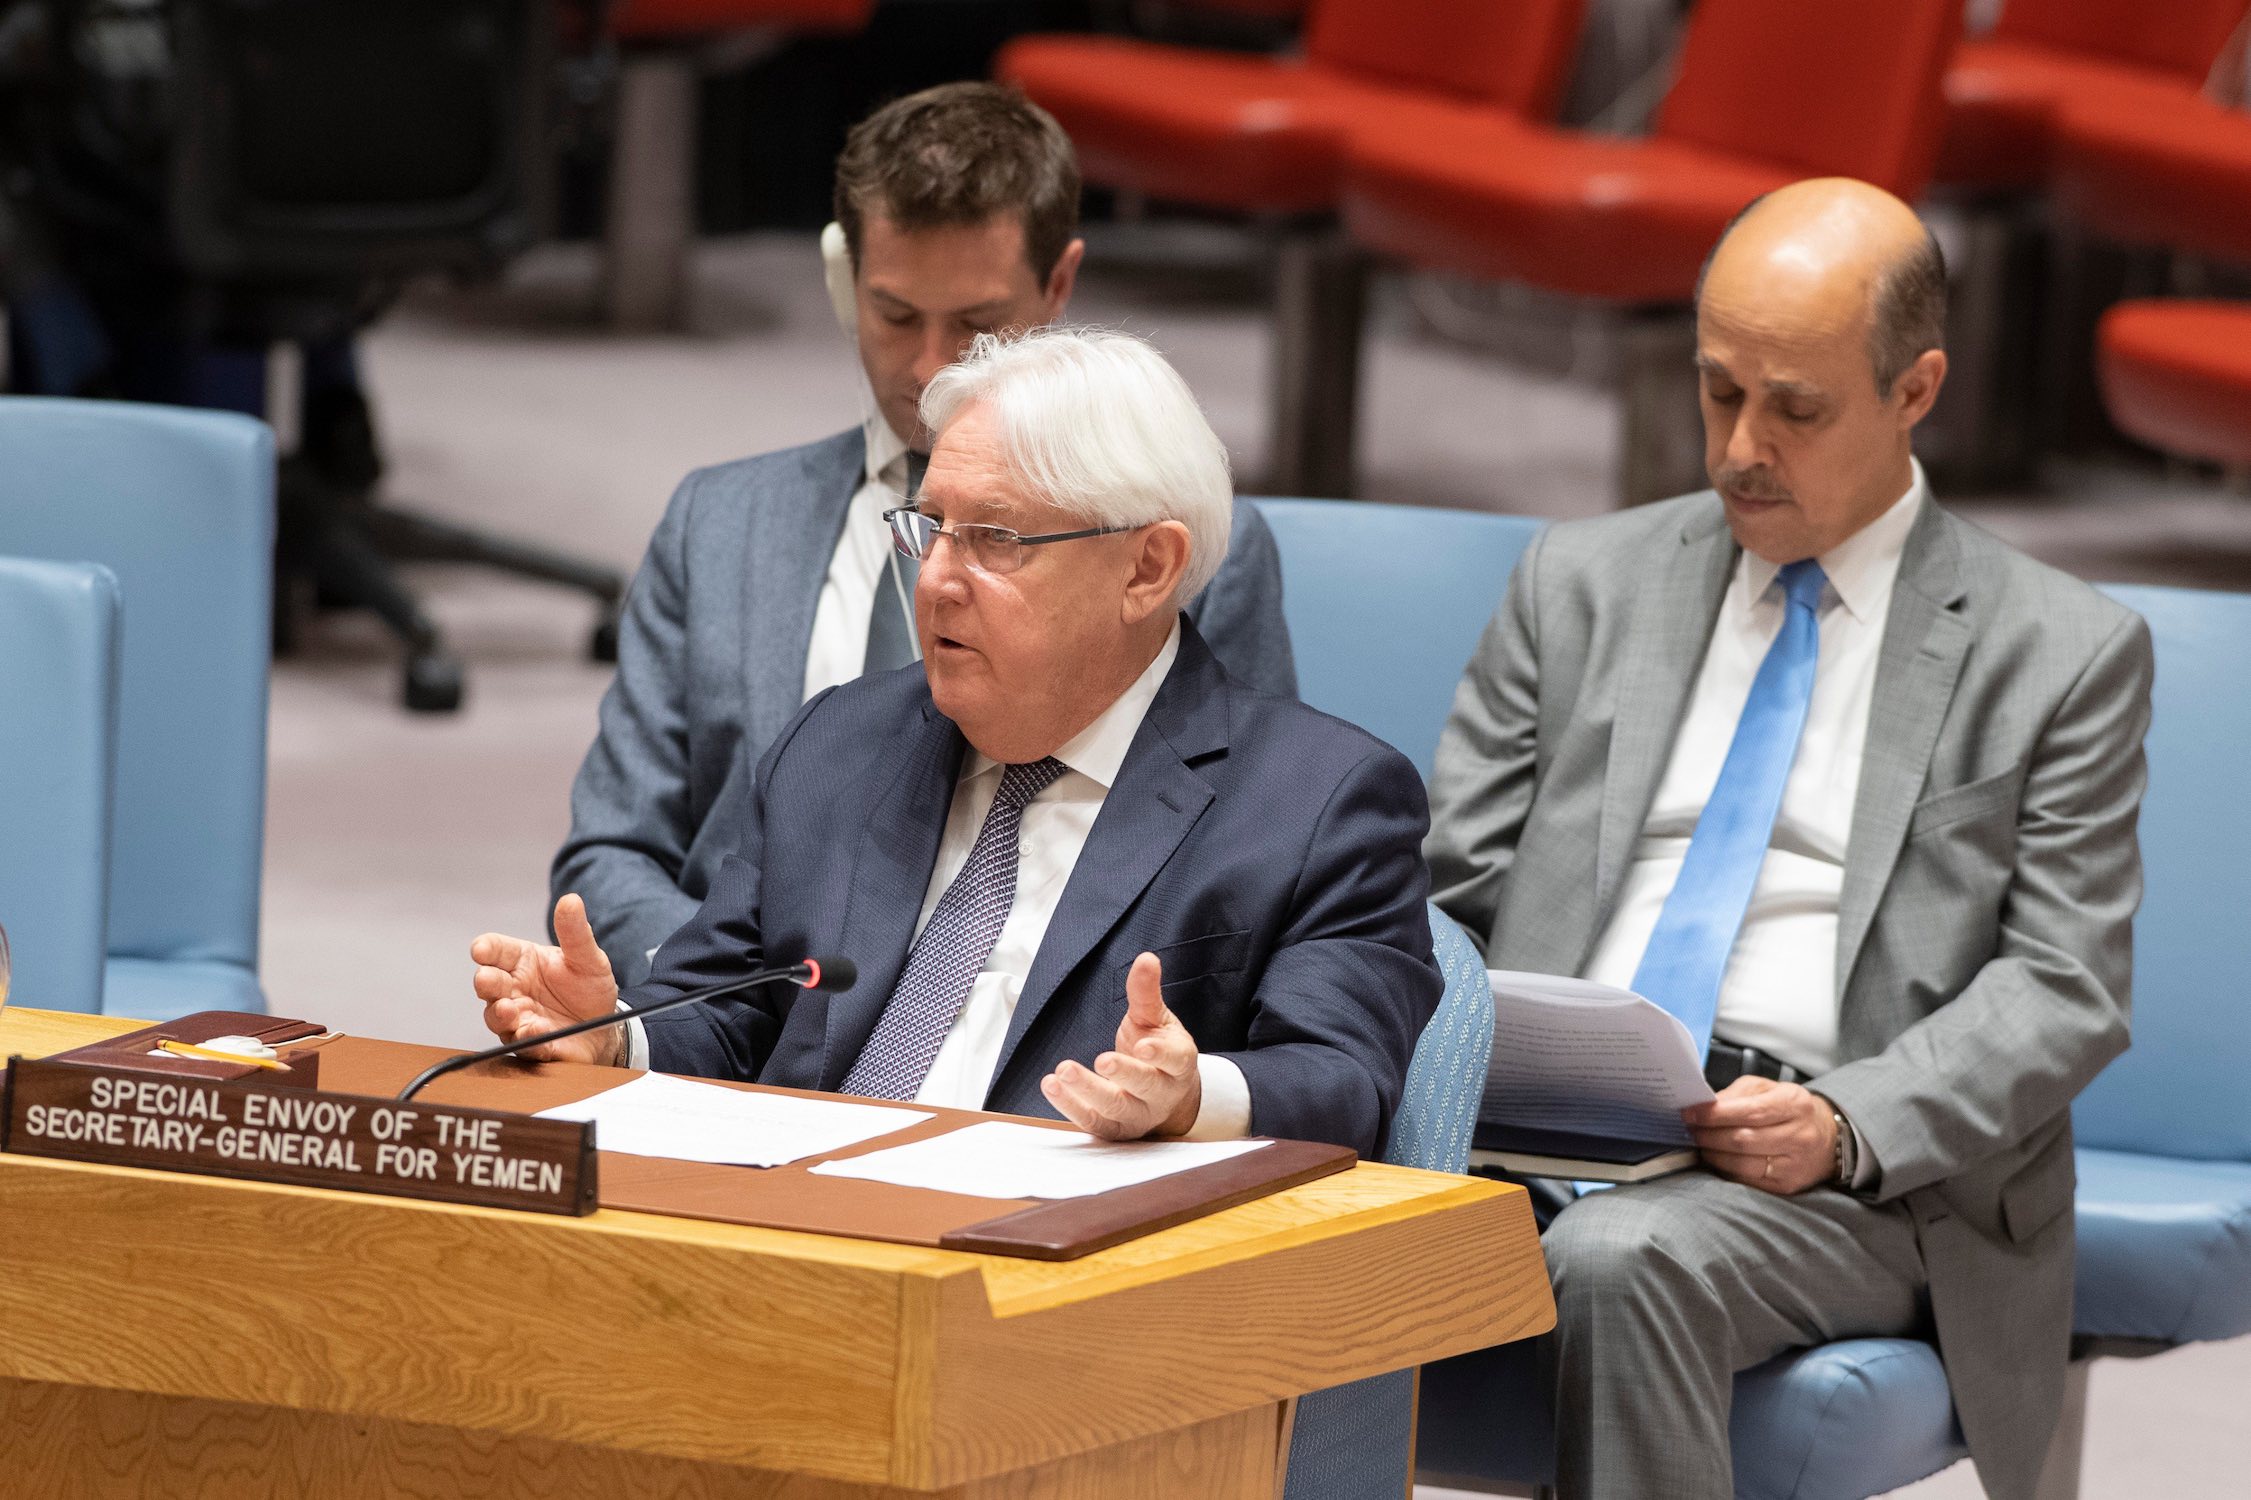 UN Special Envoy for Yemen Martin Griffiths